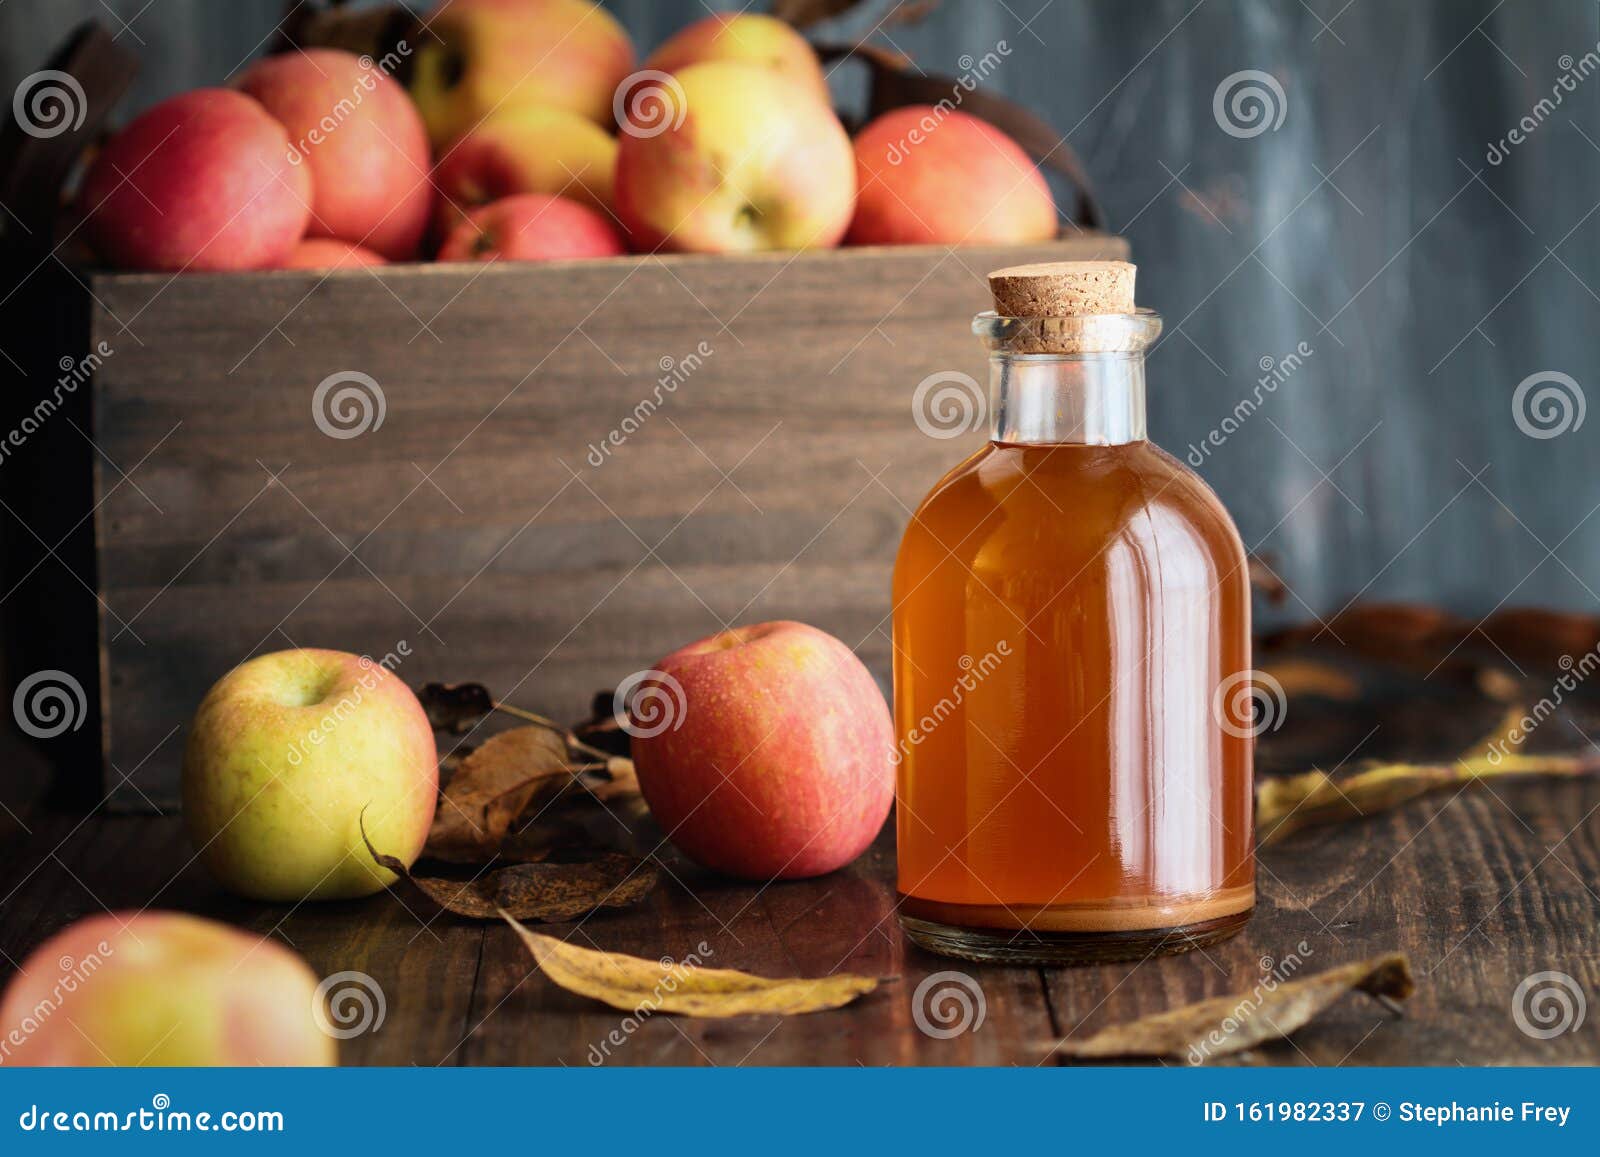 apple cider vinegar with fresh apples